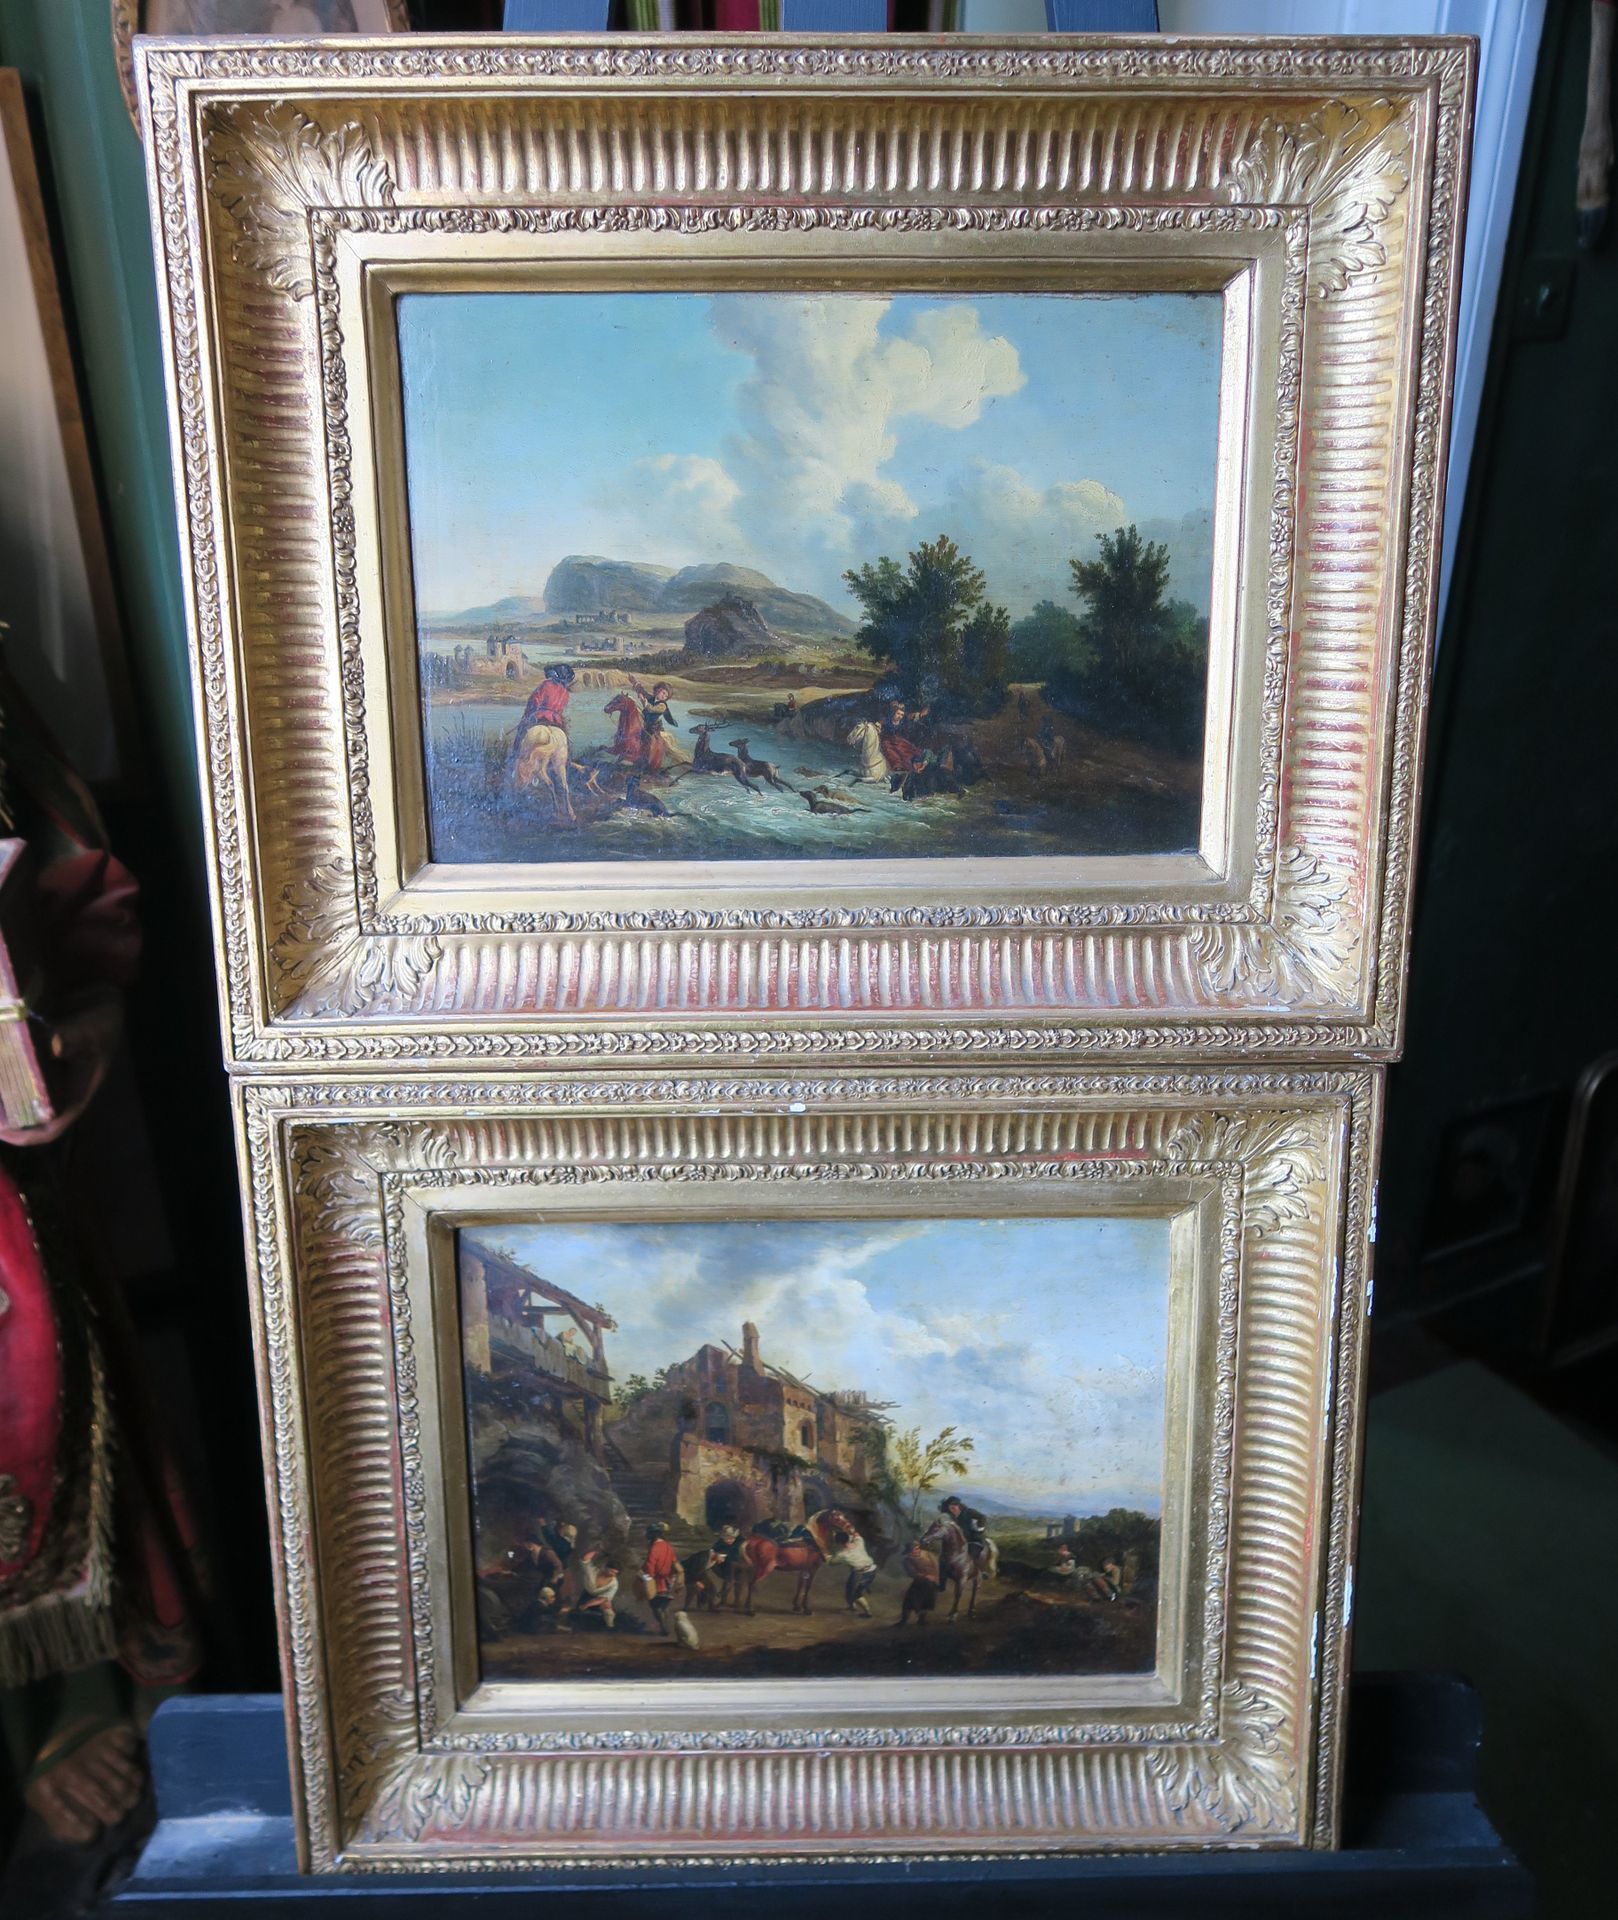 Null 18世纪末的荷兰画派
狩猎场面和费朗元帅
板上油画
23,5 x 33,5 cm 
(污损、小事故和缺框)